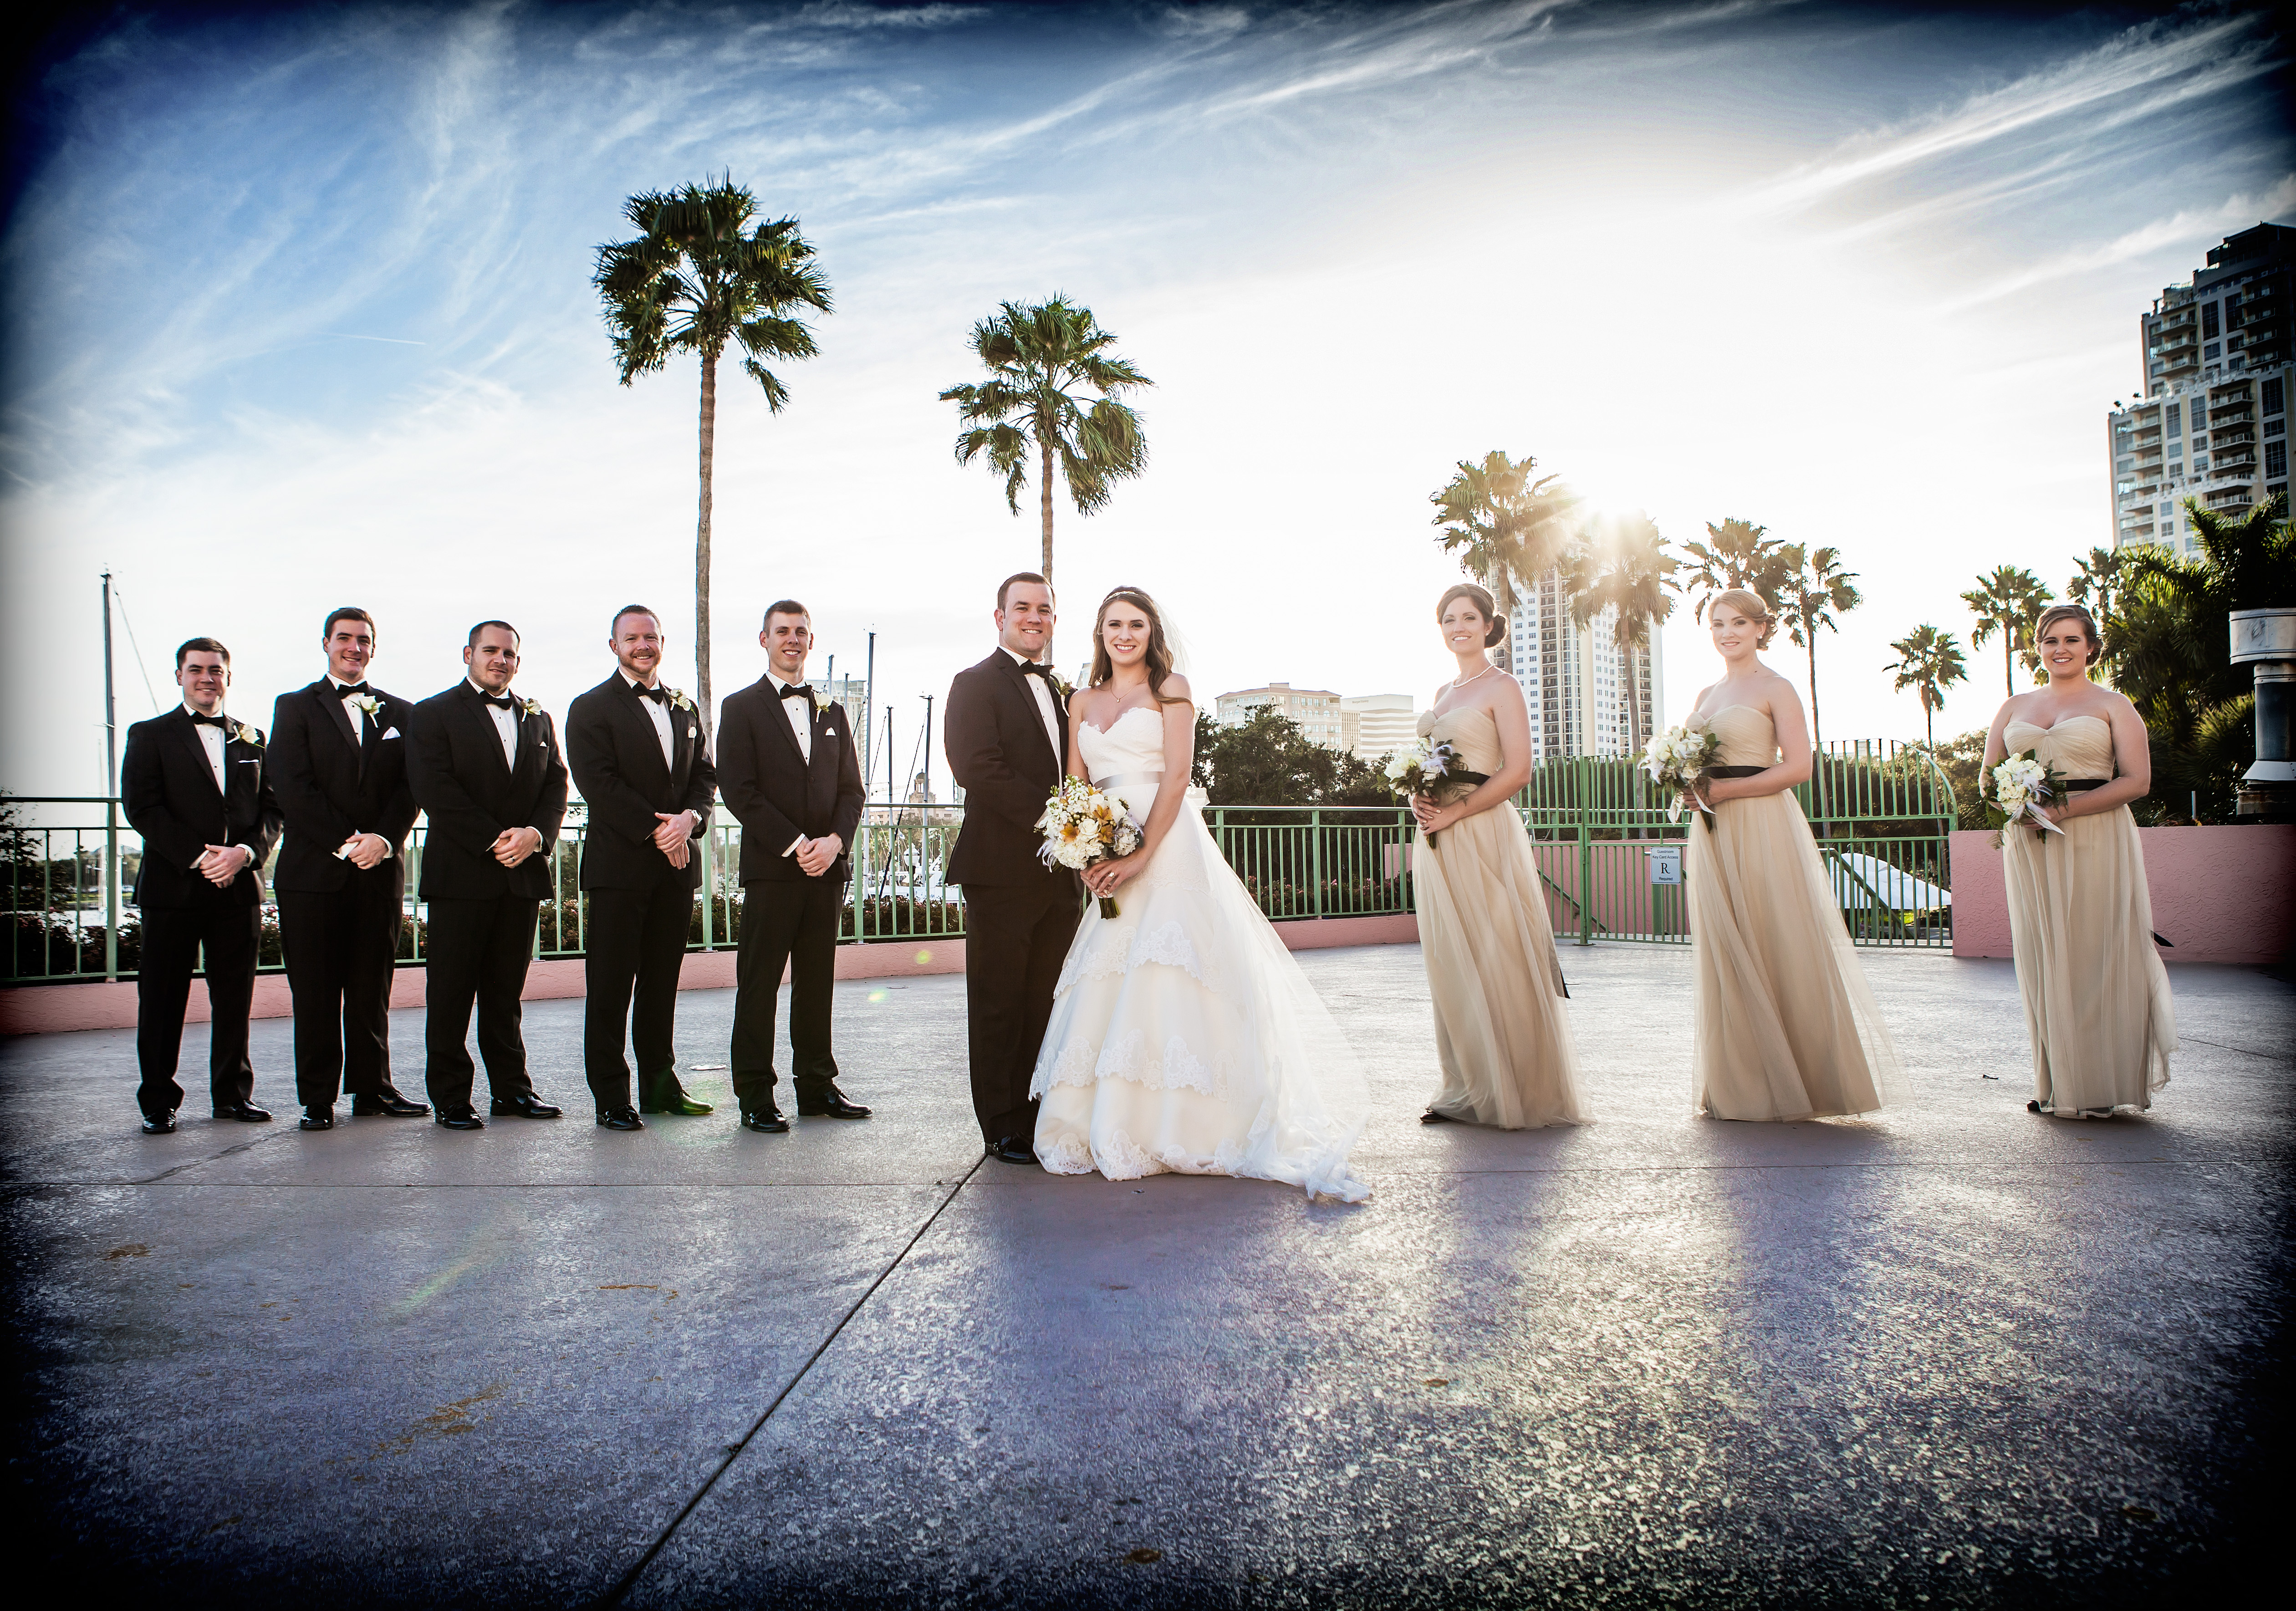 The Vinoy Wedding - St Petersburg, FL | Tampa Wedding Photographer ...